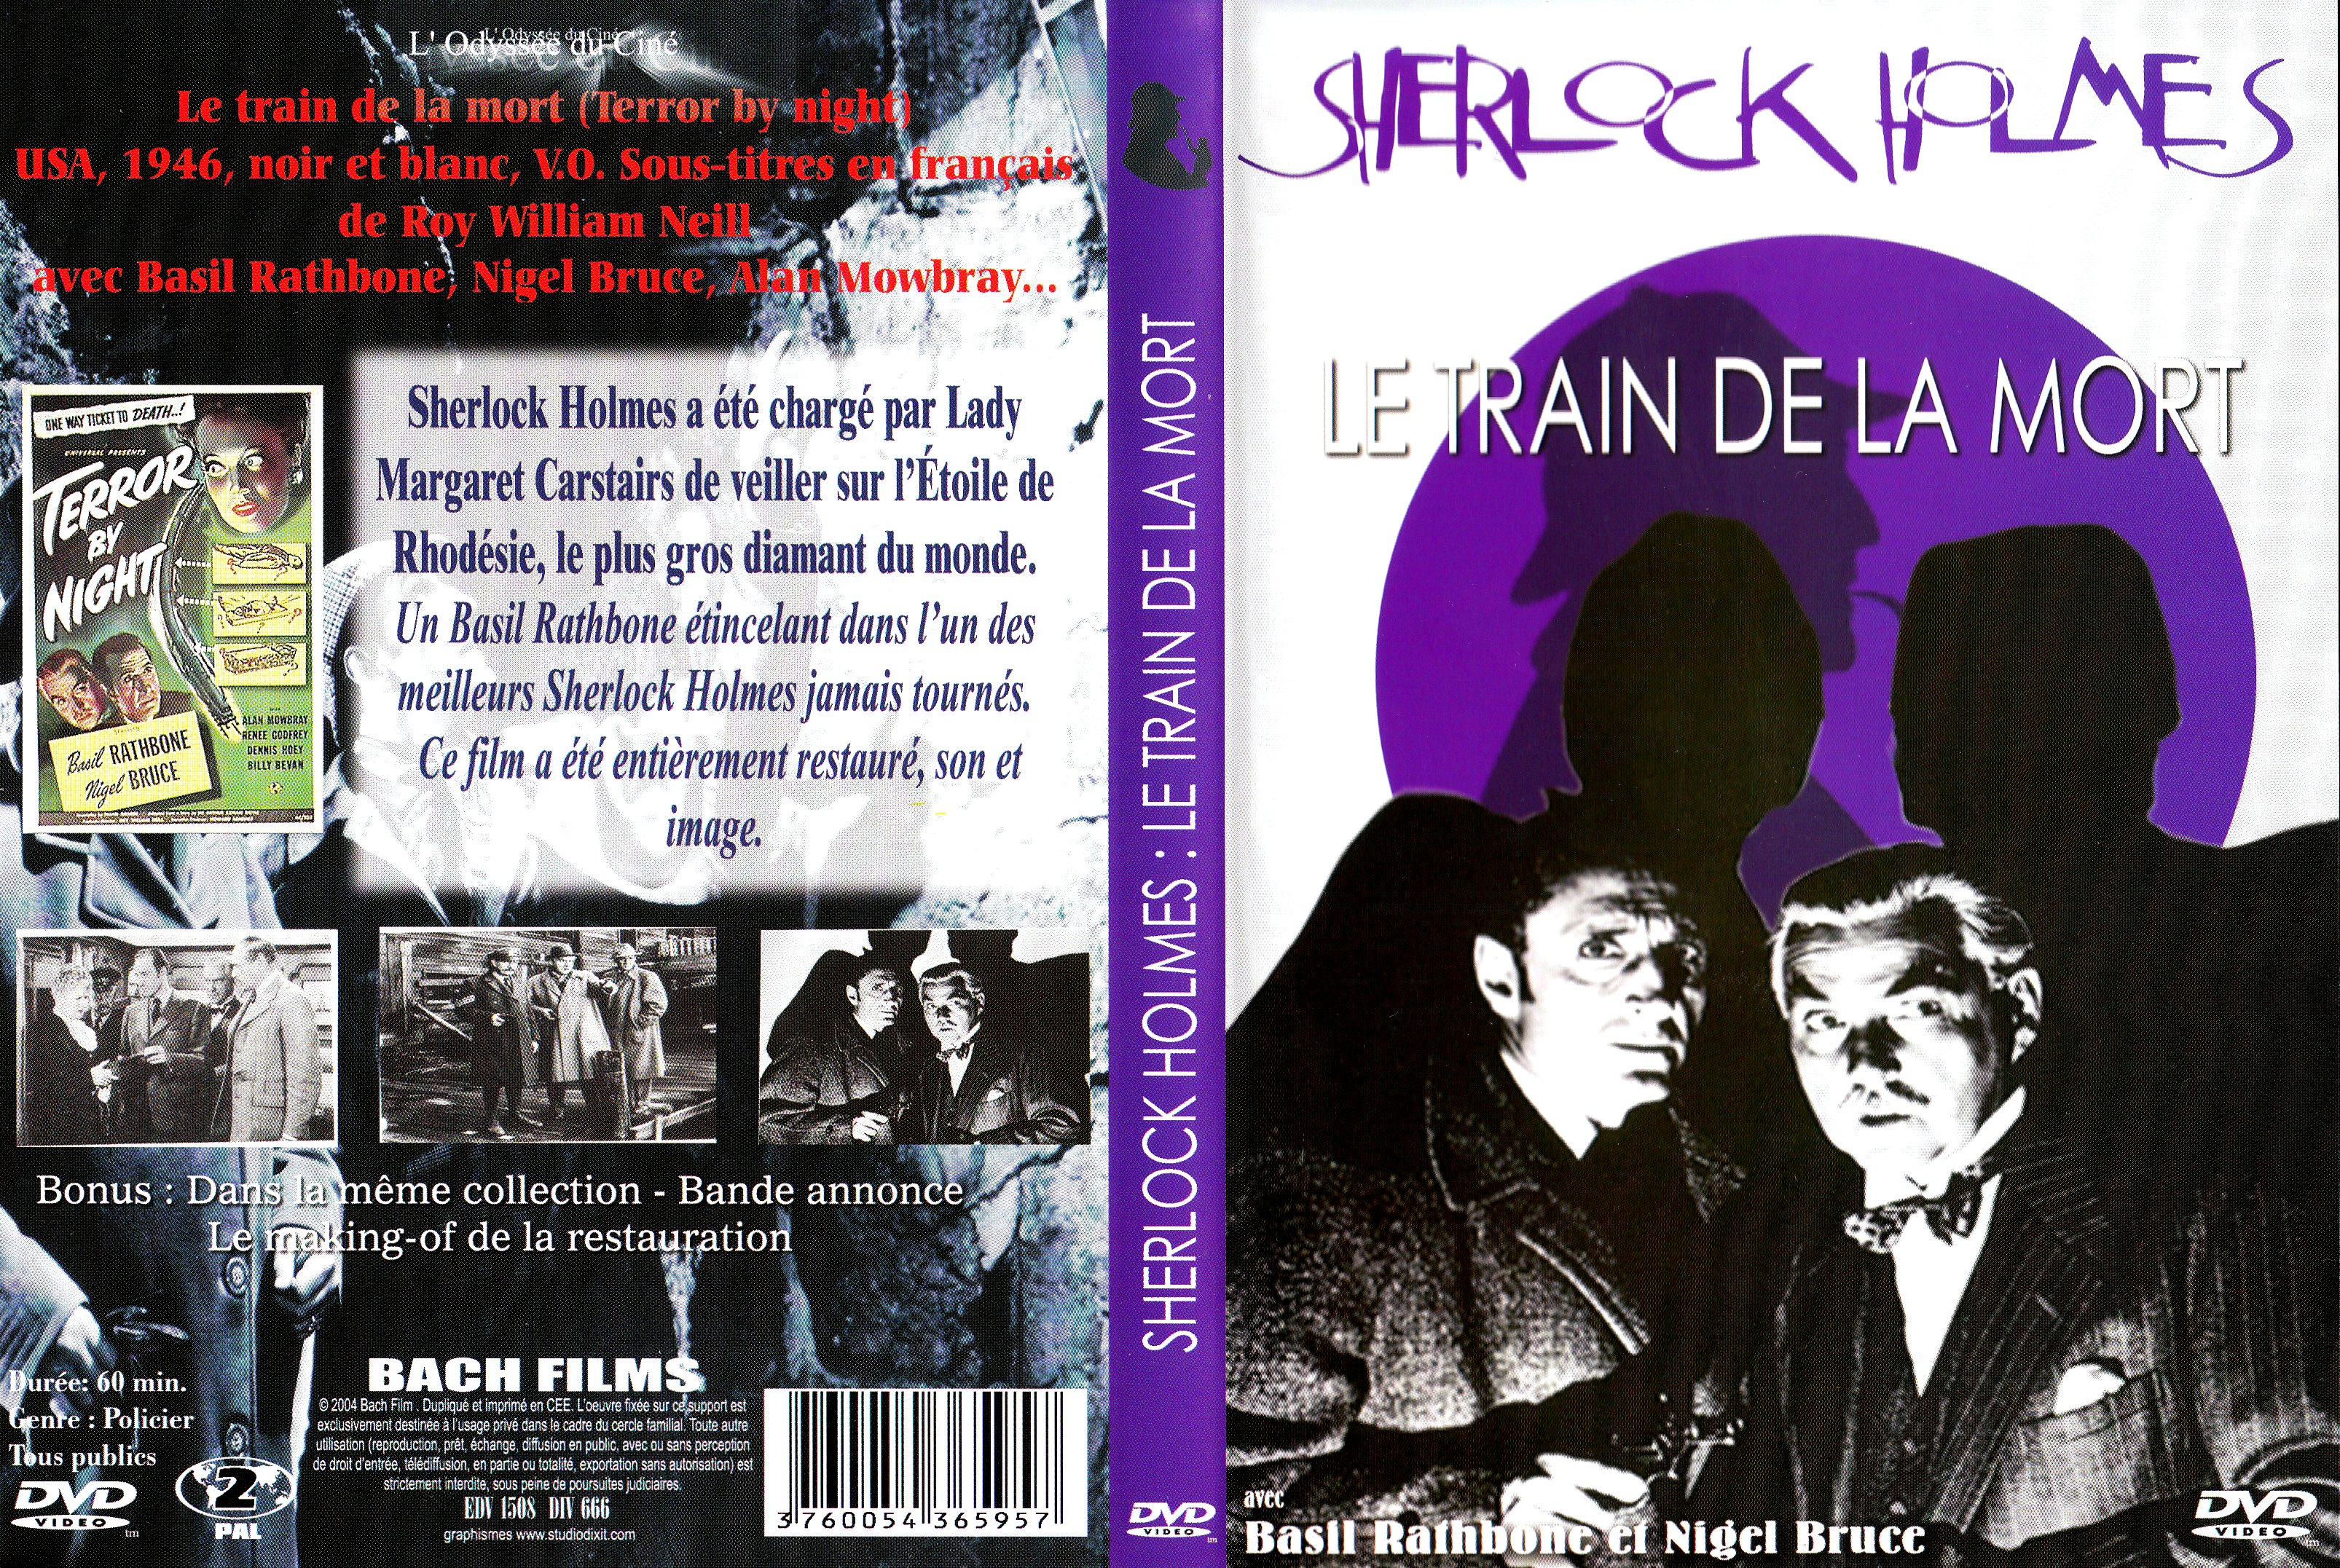 Jaquette DVD Sherlock Holmes - Le train de la mort v2